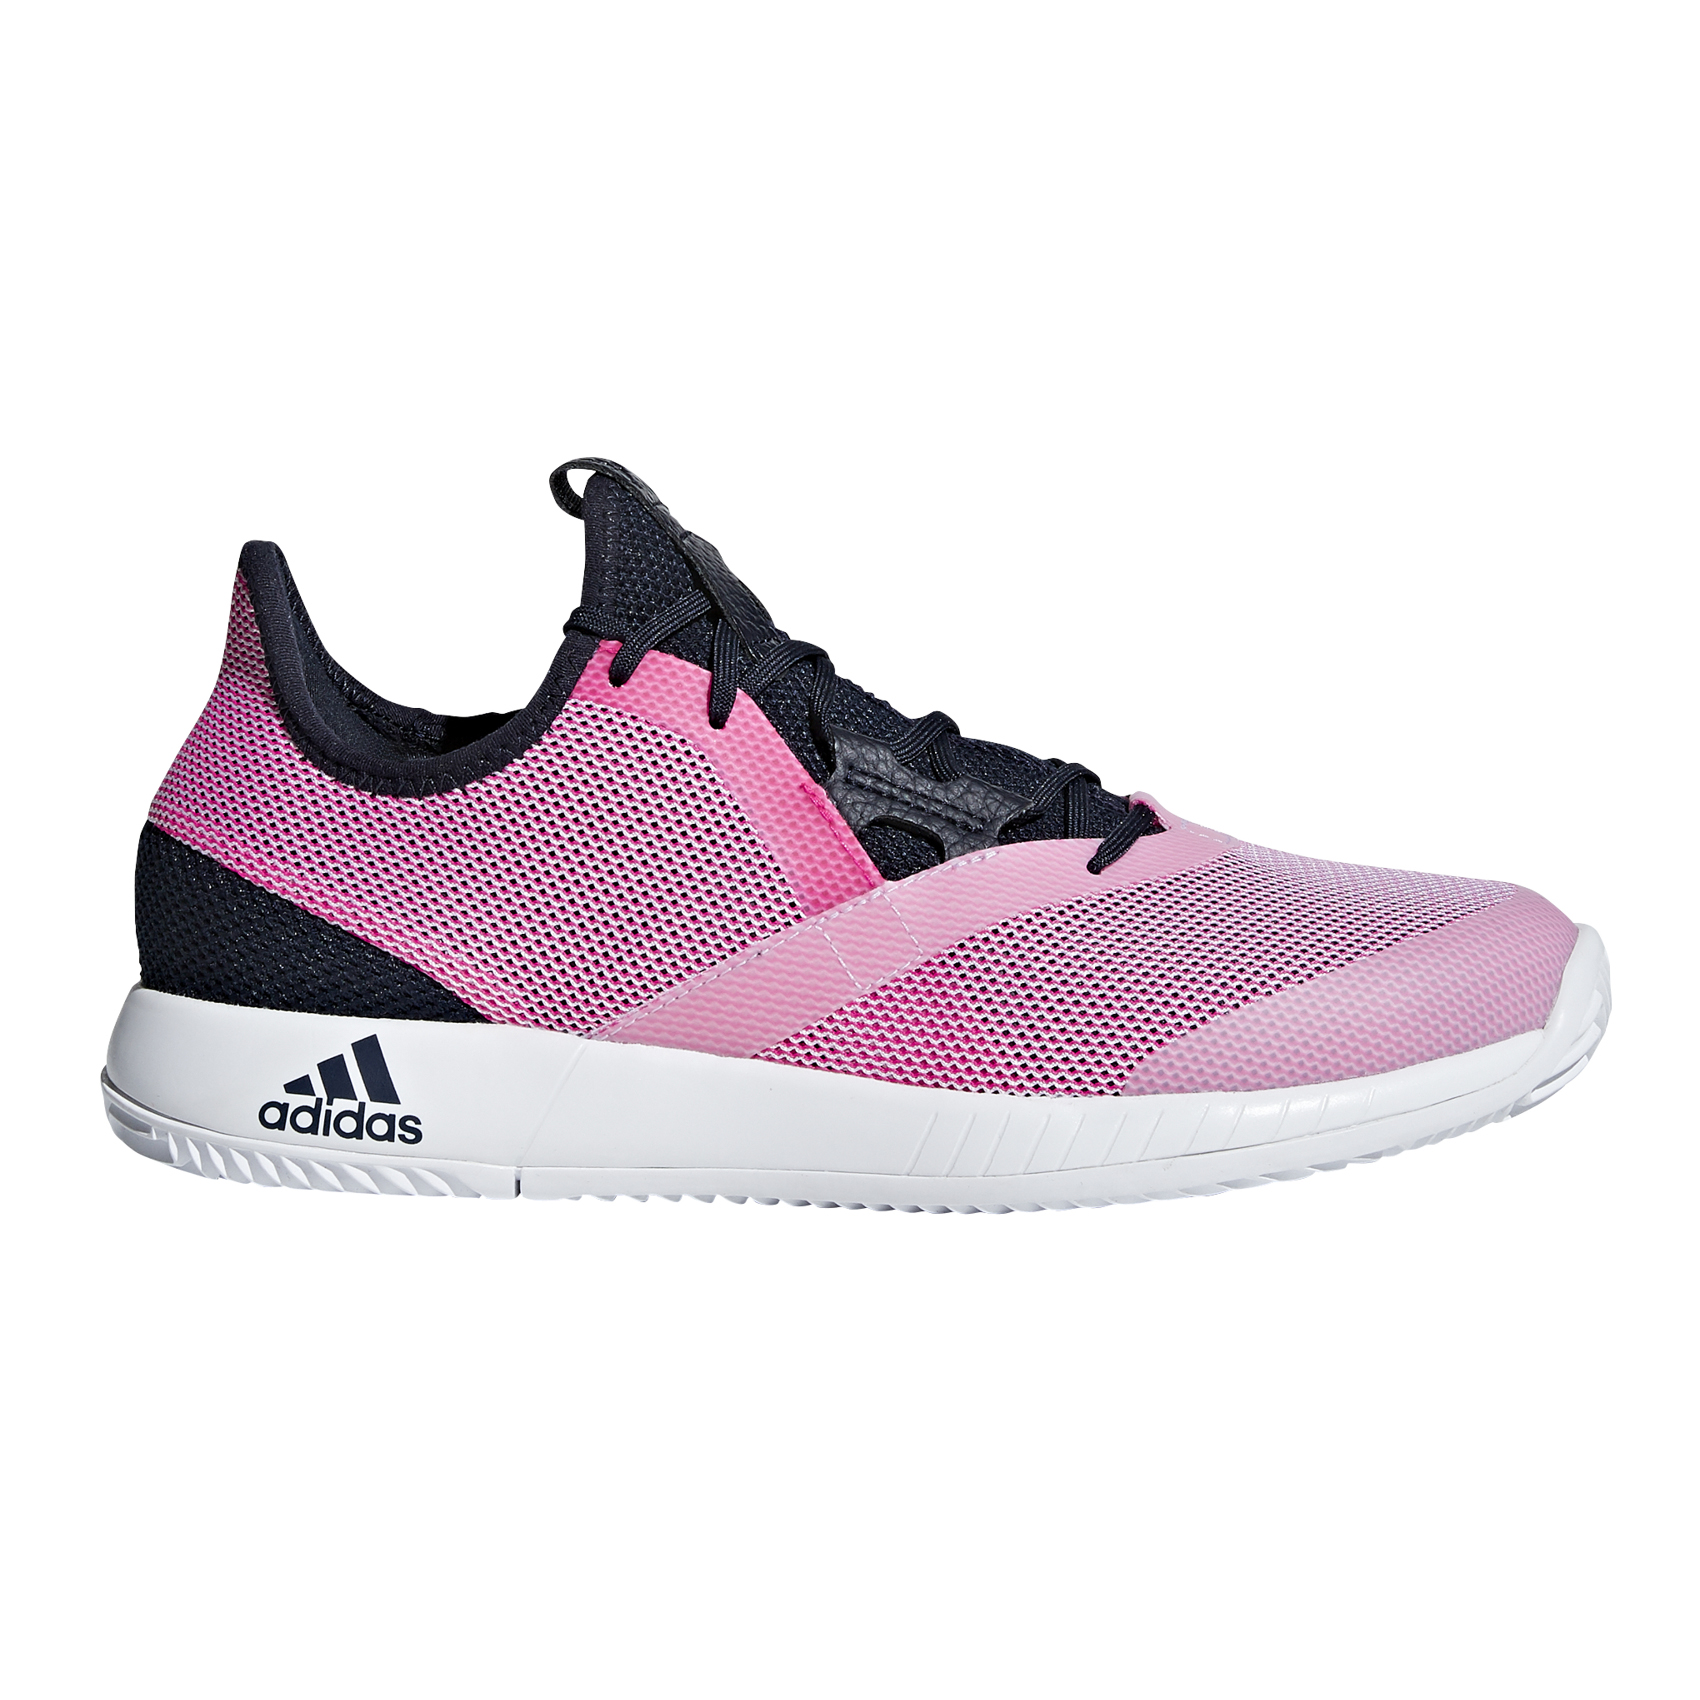 adidas bounce women's pink